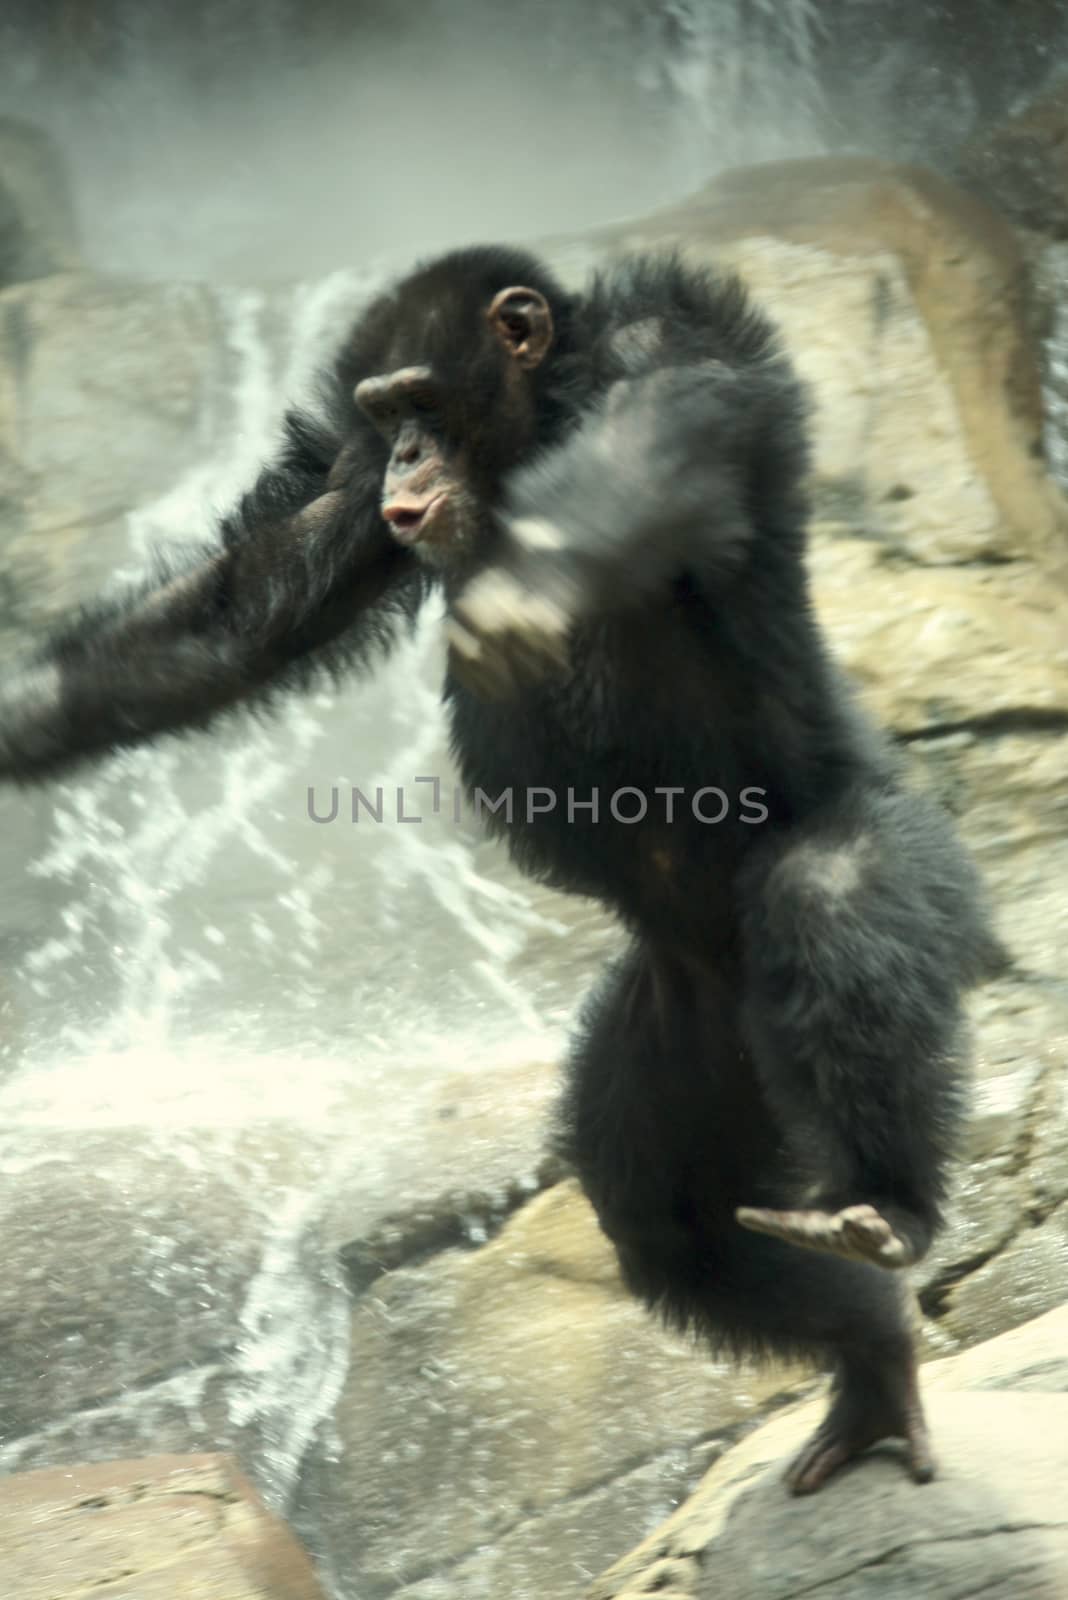 Wildly Jumping Chimp by tobkatrina